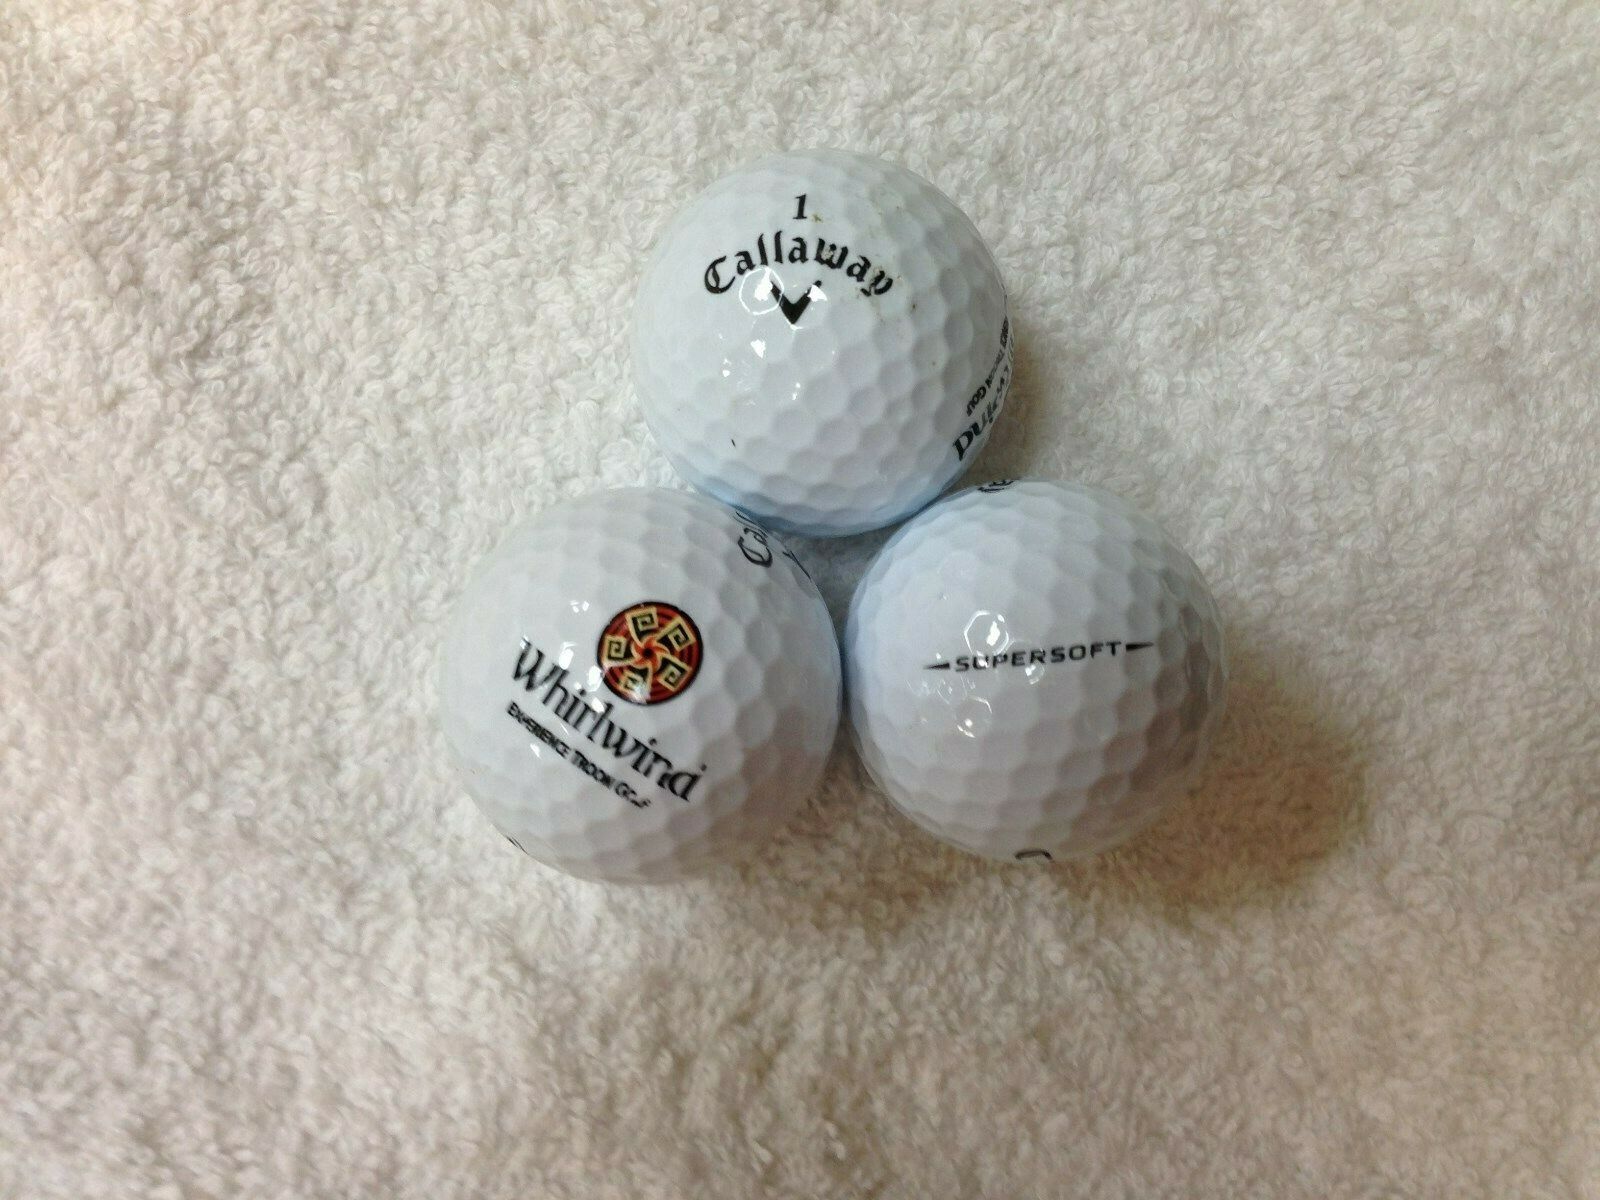 24/5A(AAAAA)Callaway Supersoft Balls(logo)  to US address.